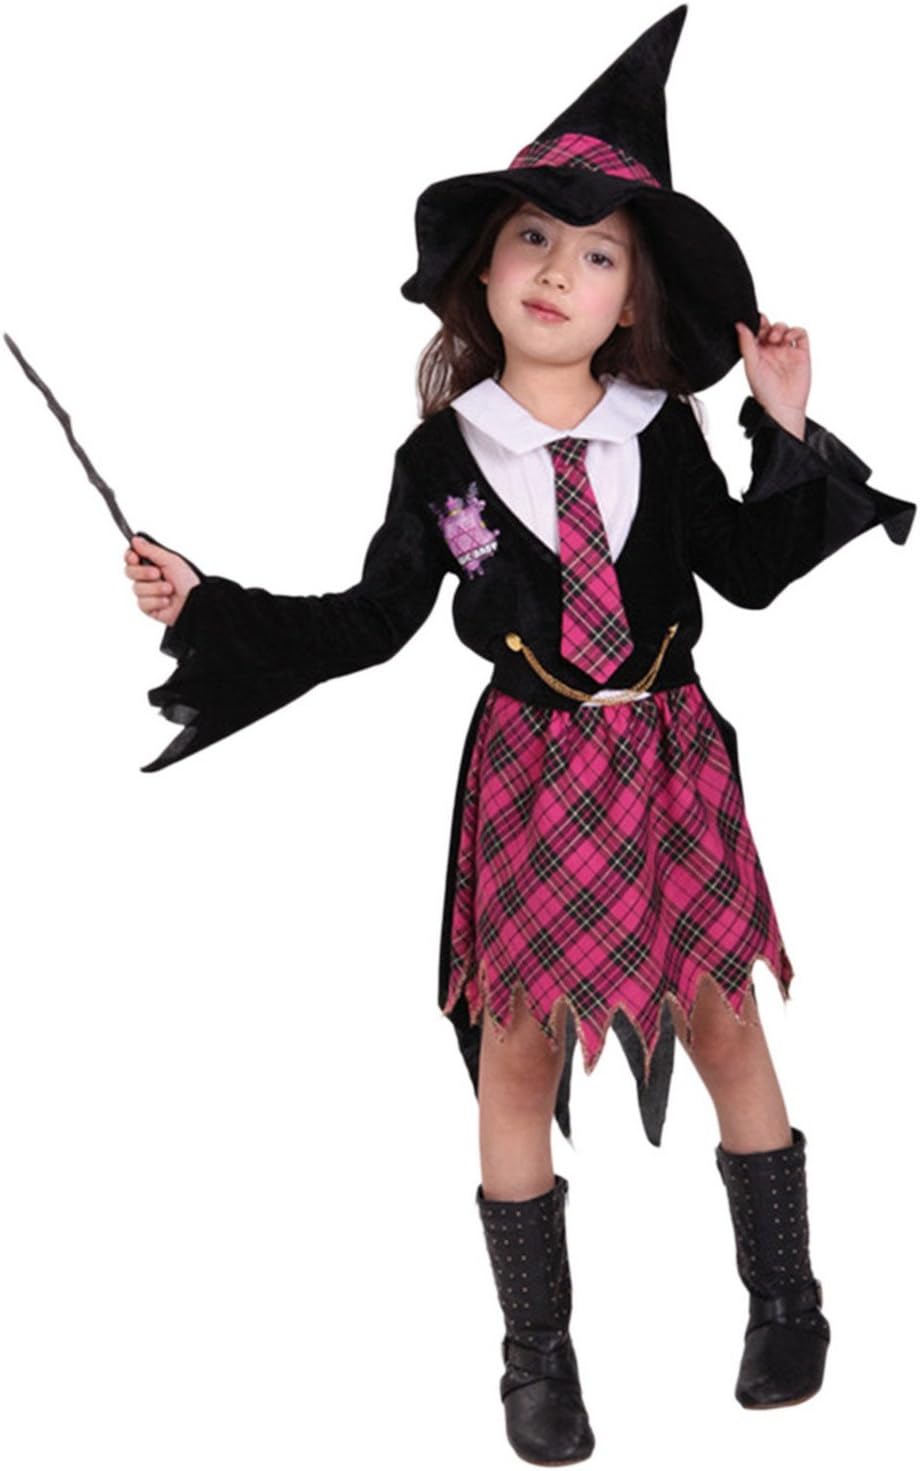 Kids Halloween Cosplay Costume, Girls, Uniform Style, Wizard Costume, Girls, School Festival, Fancy Dress Ball, Theatrical Party - Al Ghani Stores